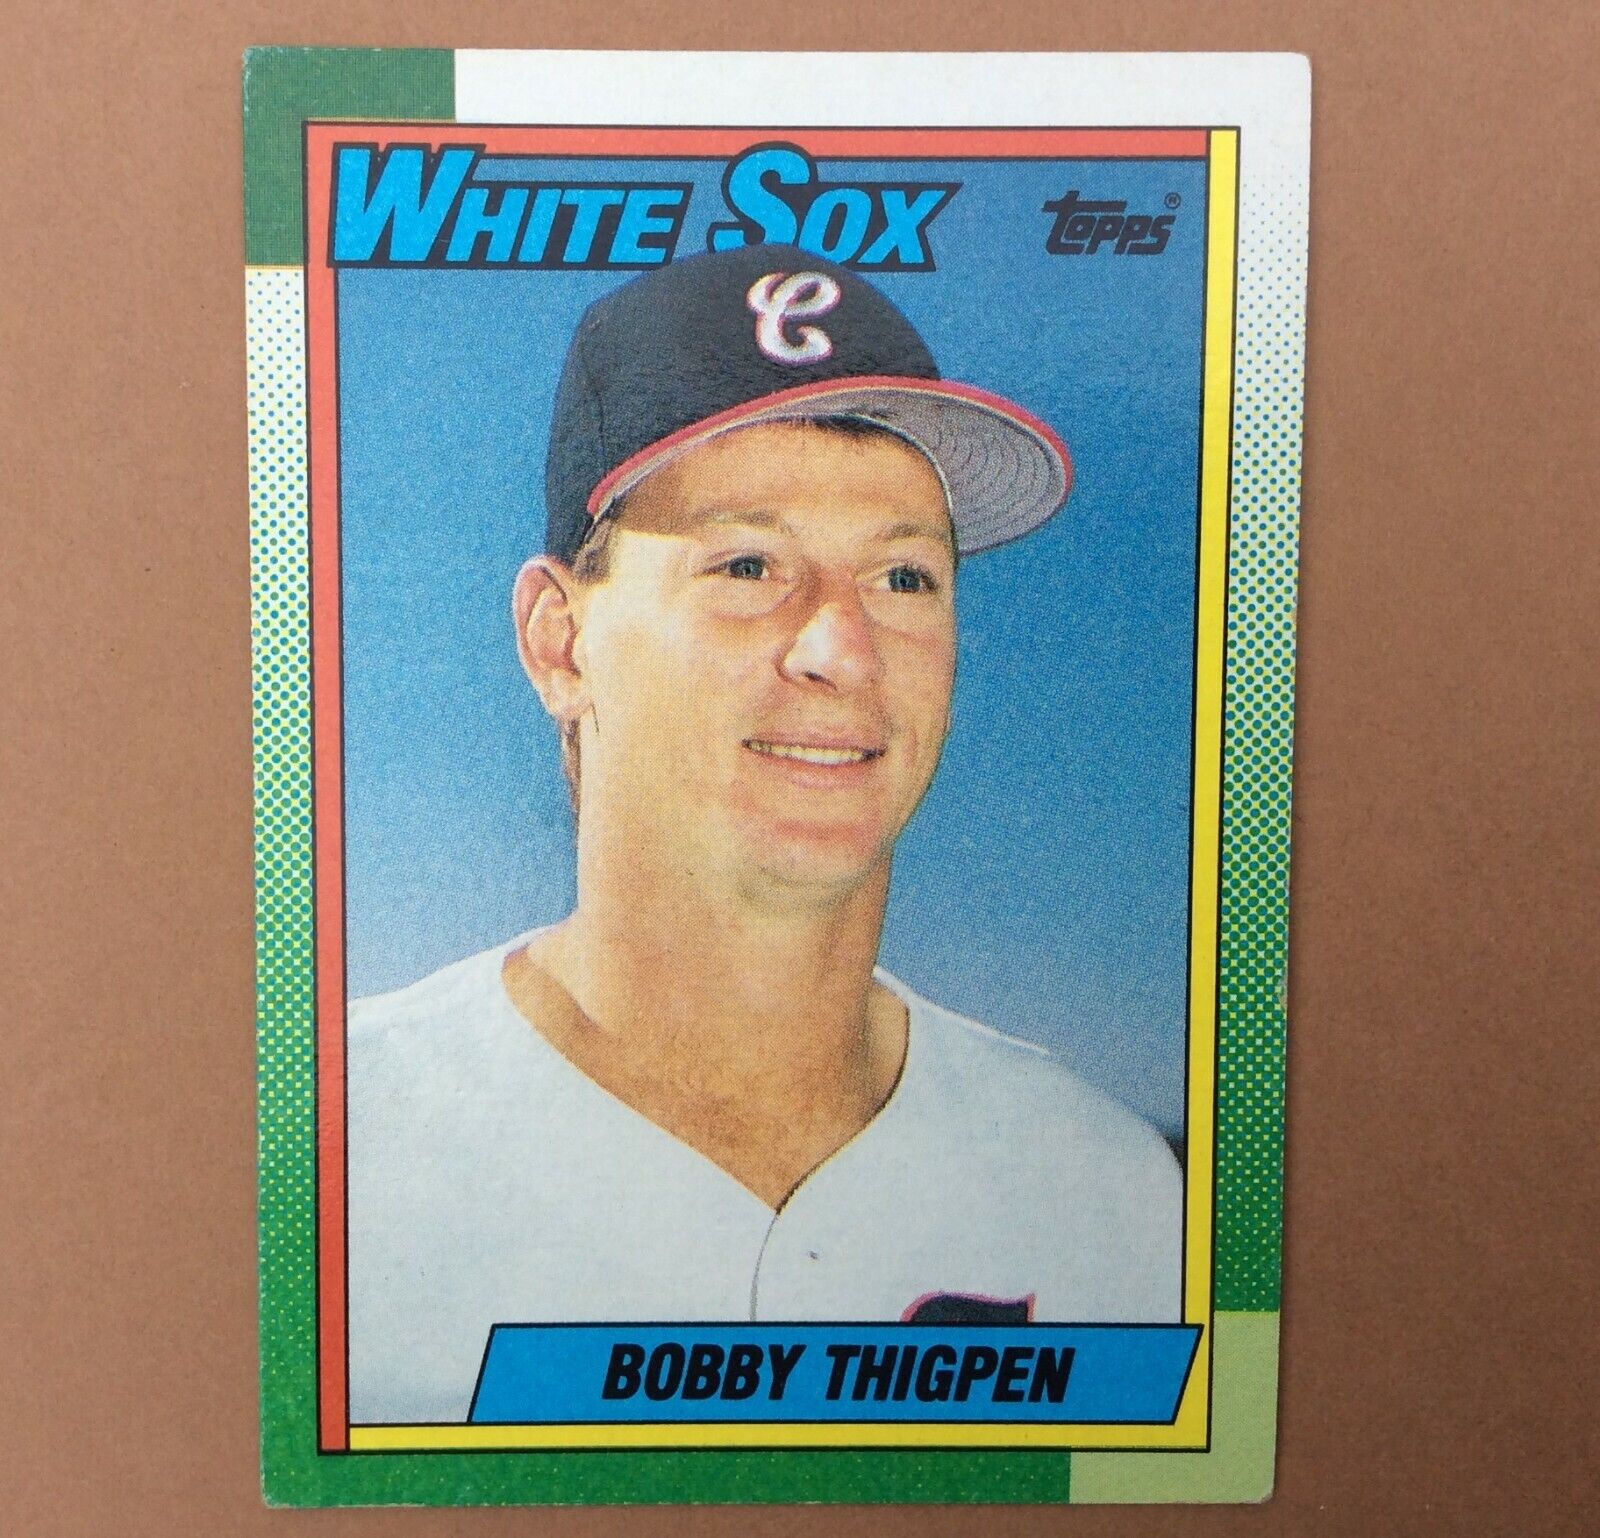 1990 TOPPS BASEBALL CARD #255 BOBBY THIGPEN WHITE SOX Trading Card